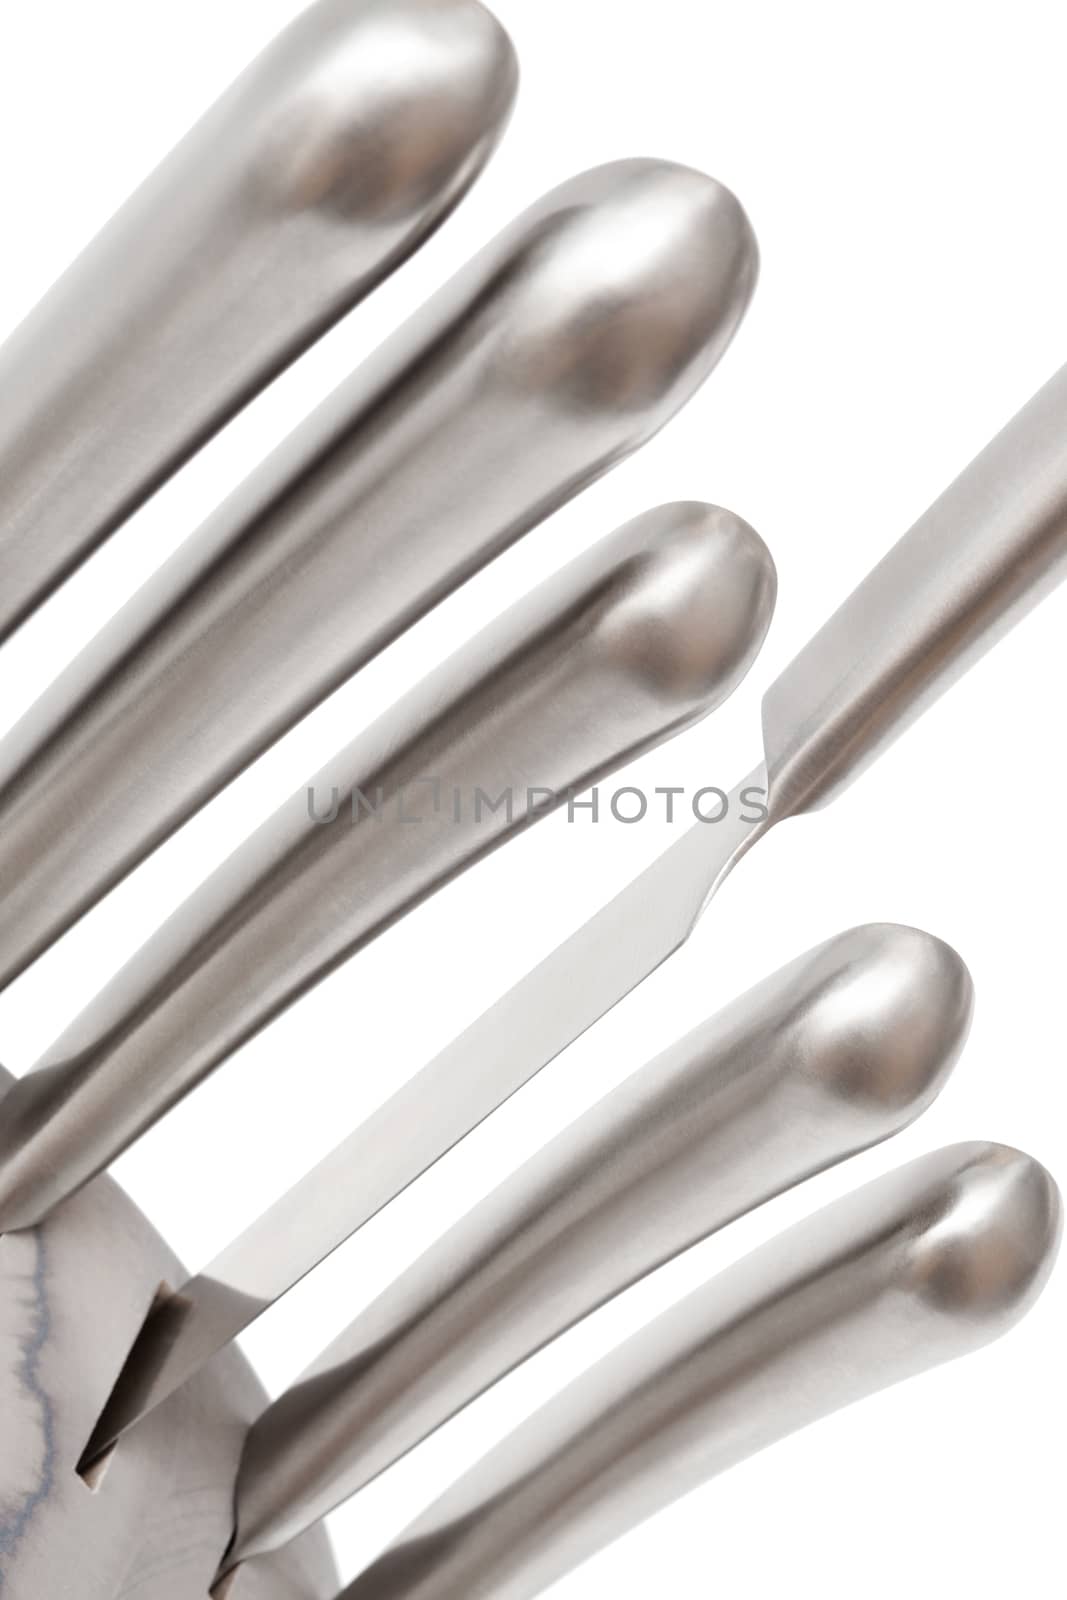 set of kitchen knives on a white background